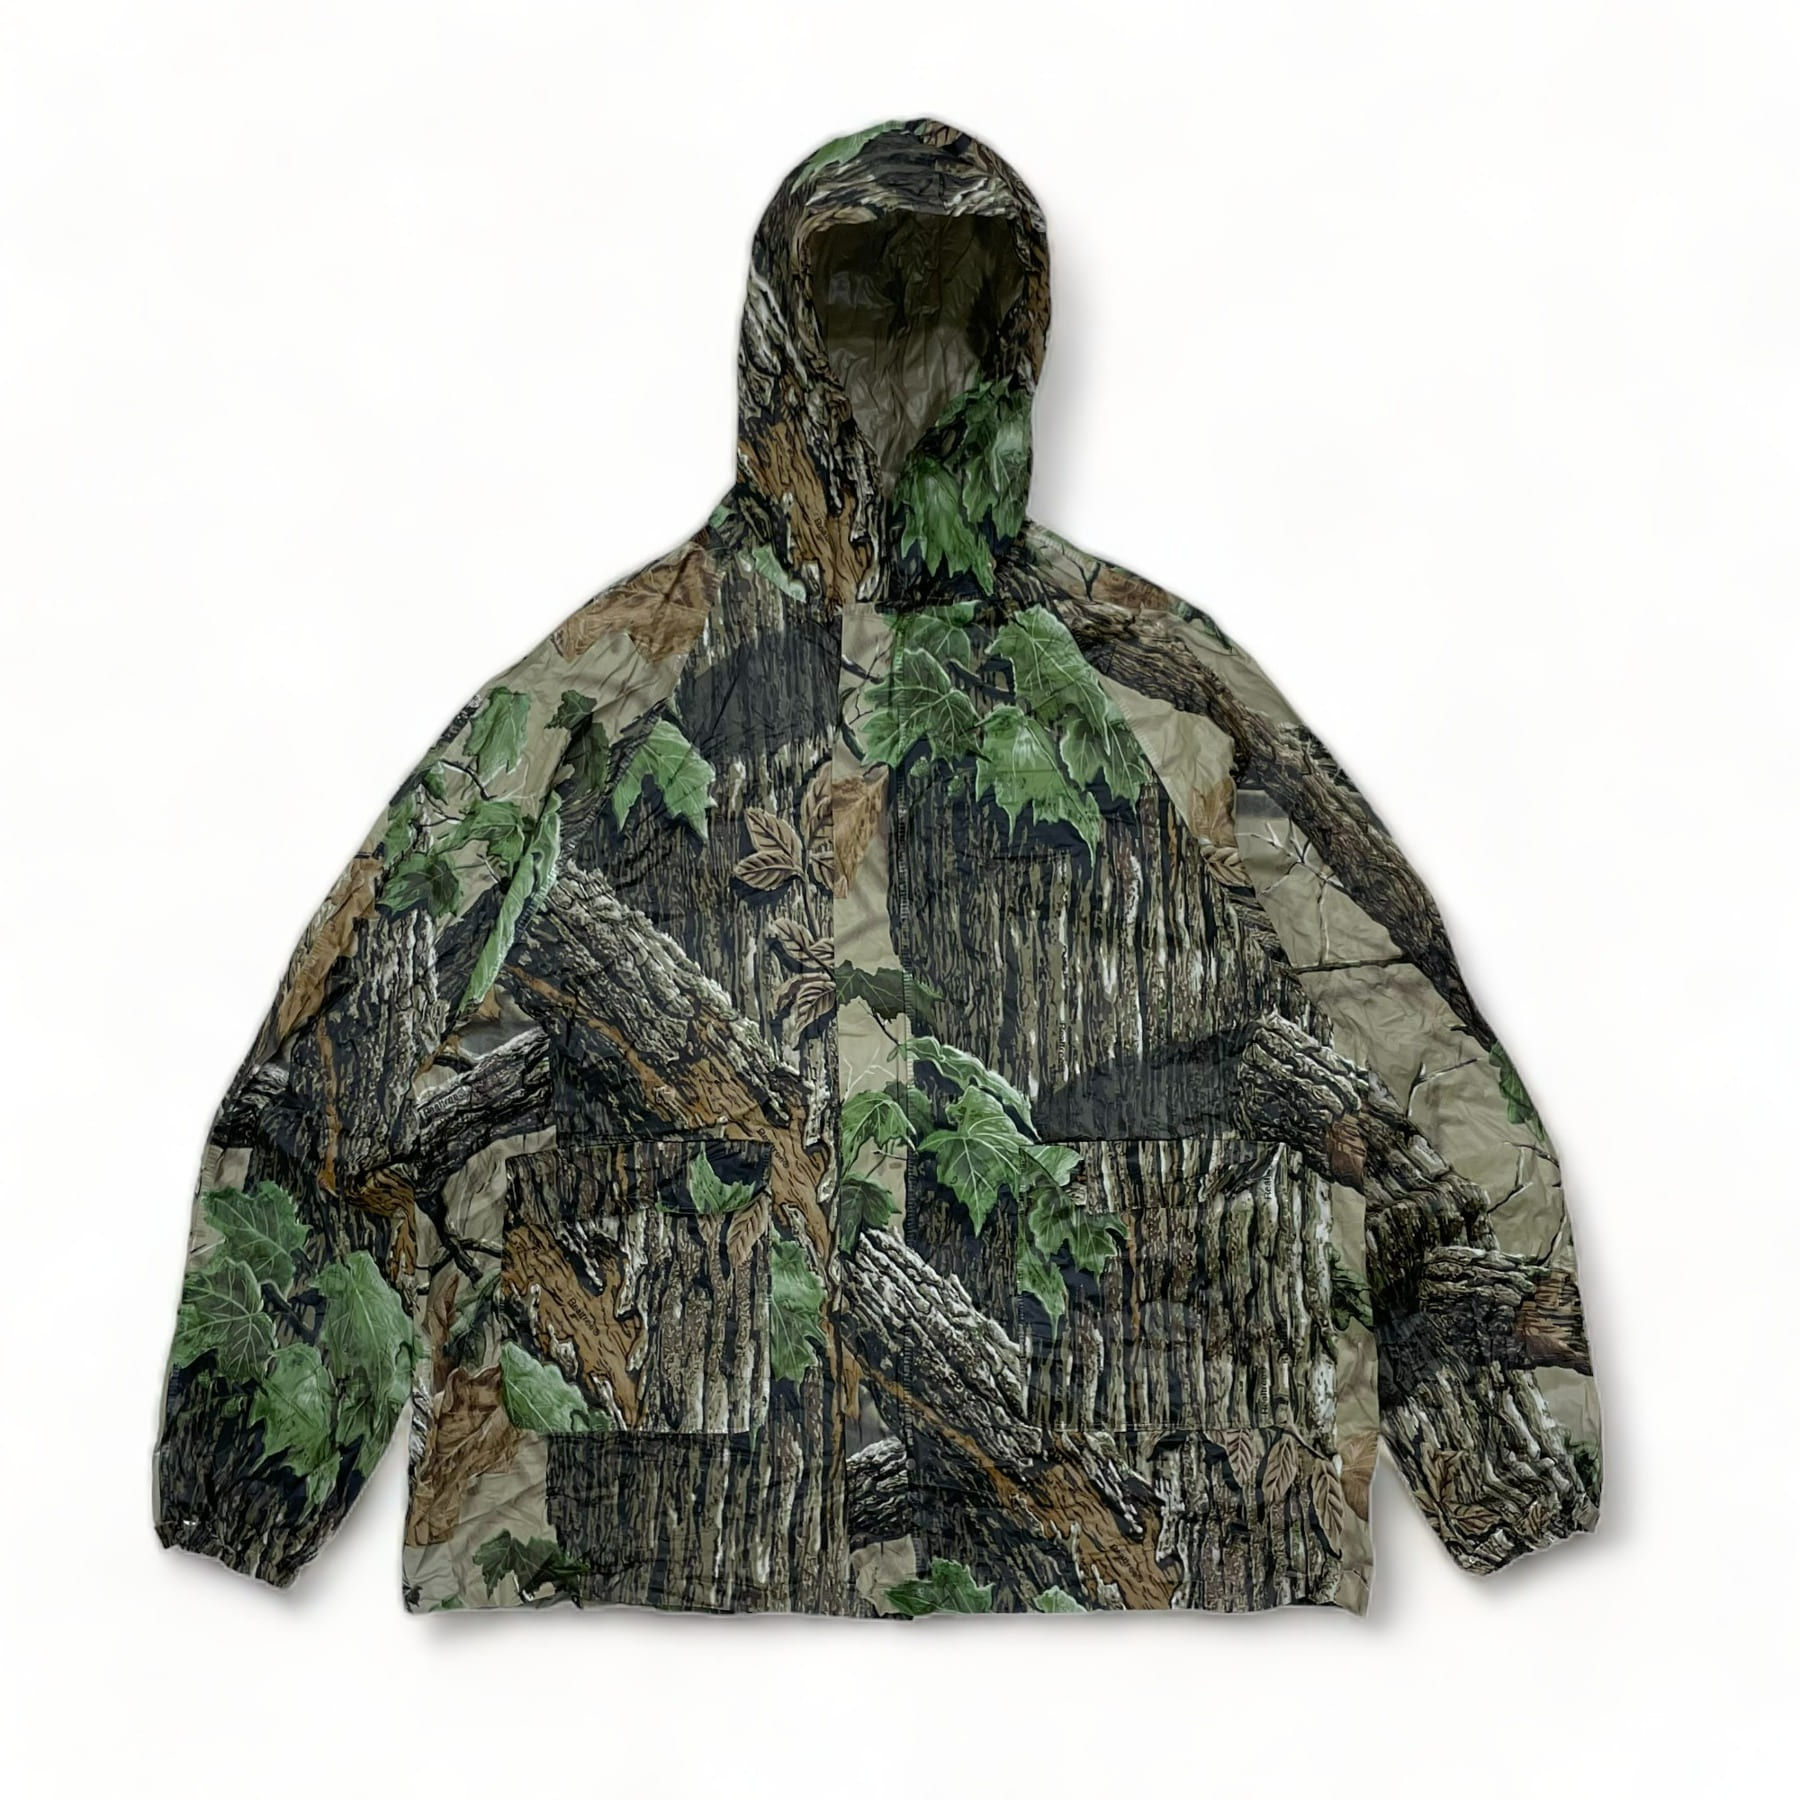 Stearns Mfg Realtree Camo PVC Hooded Jacket - L